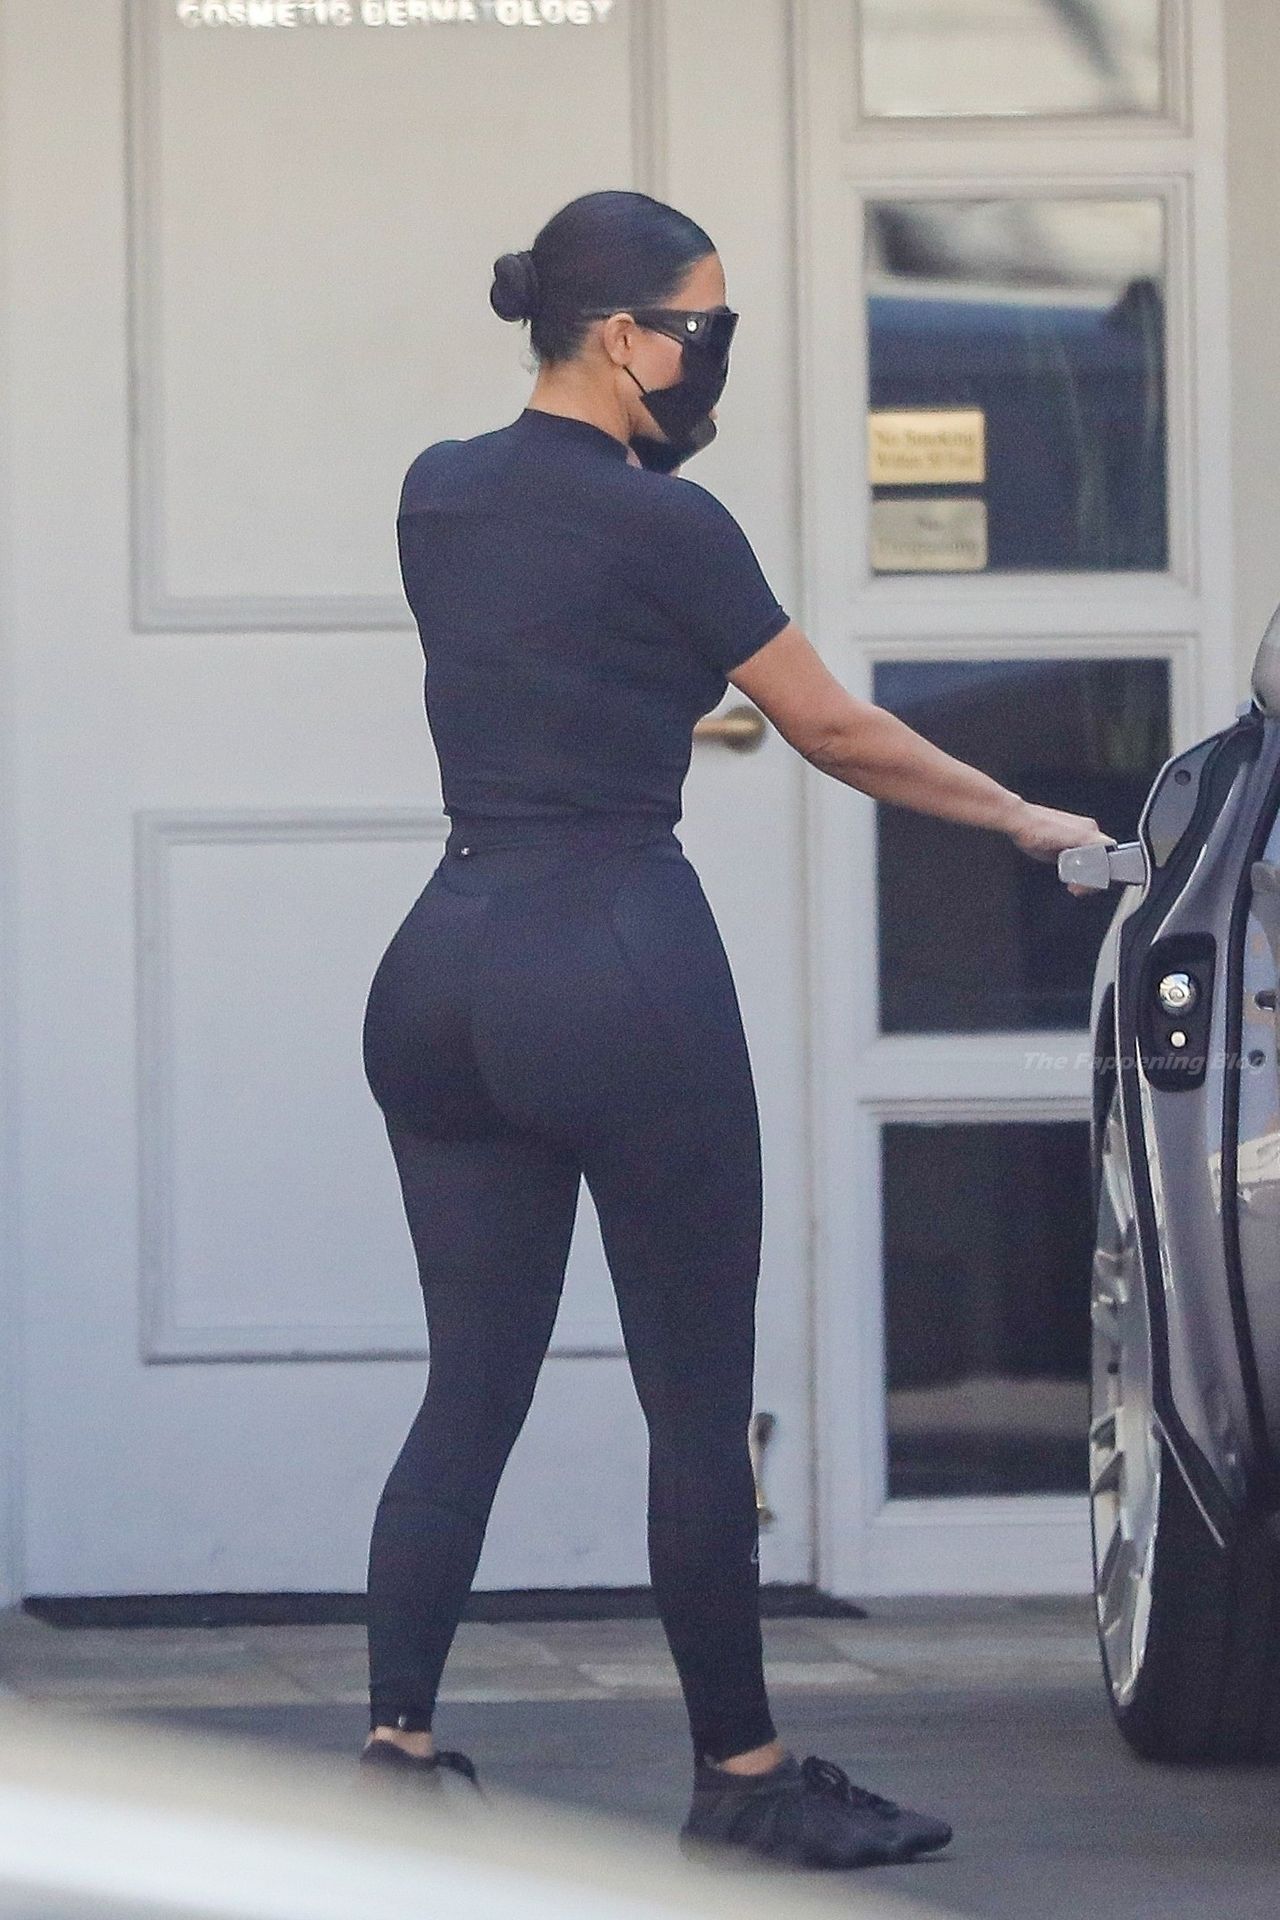 Curvy Kim Kardashian Hits Up Epione For Some Pampering (44 Phot
os)